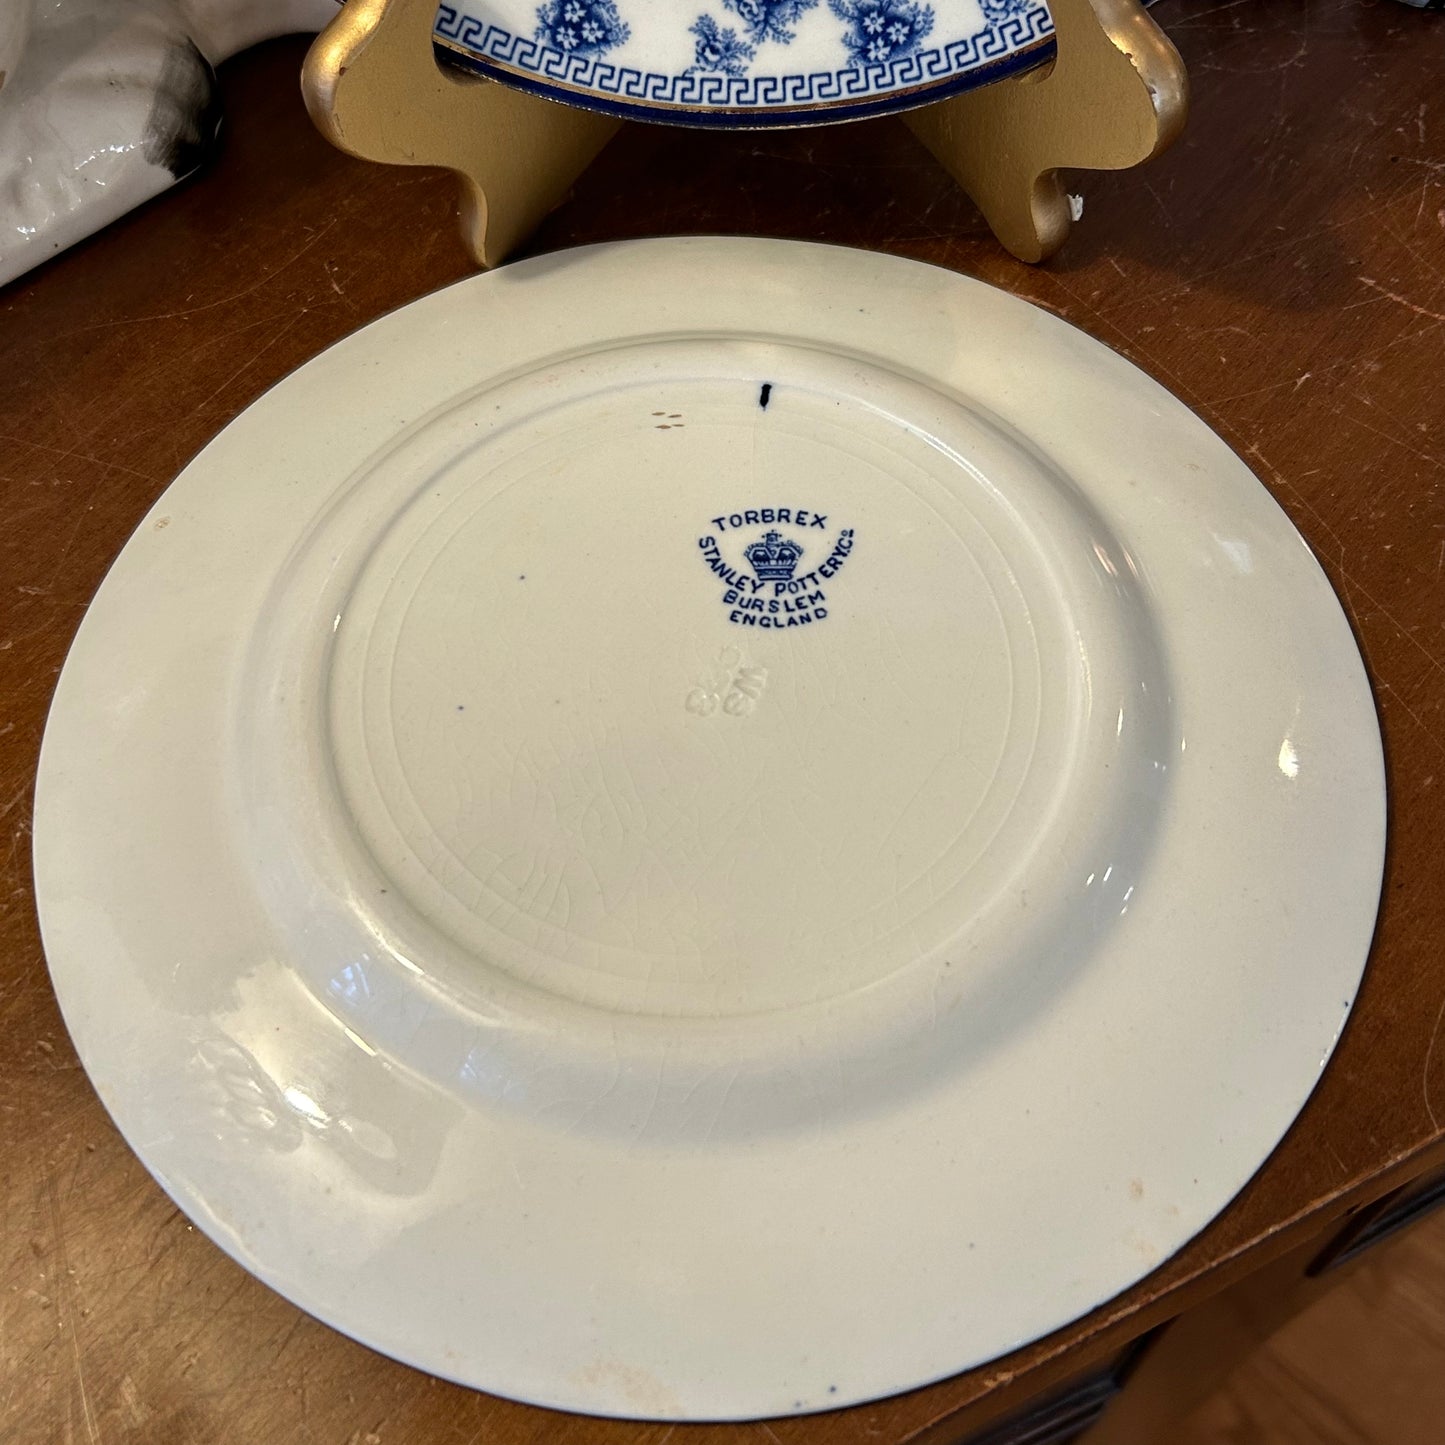 Set of two antique plates from Torbrex Burslem England